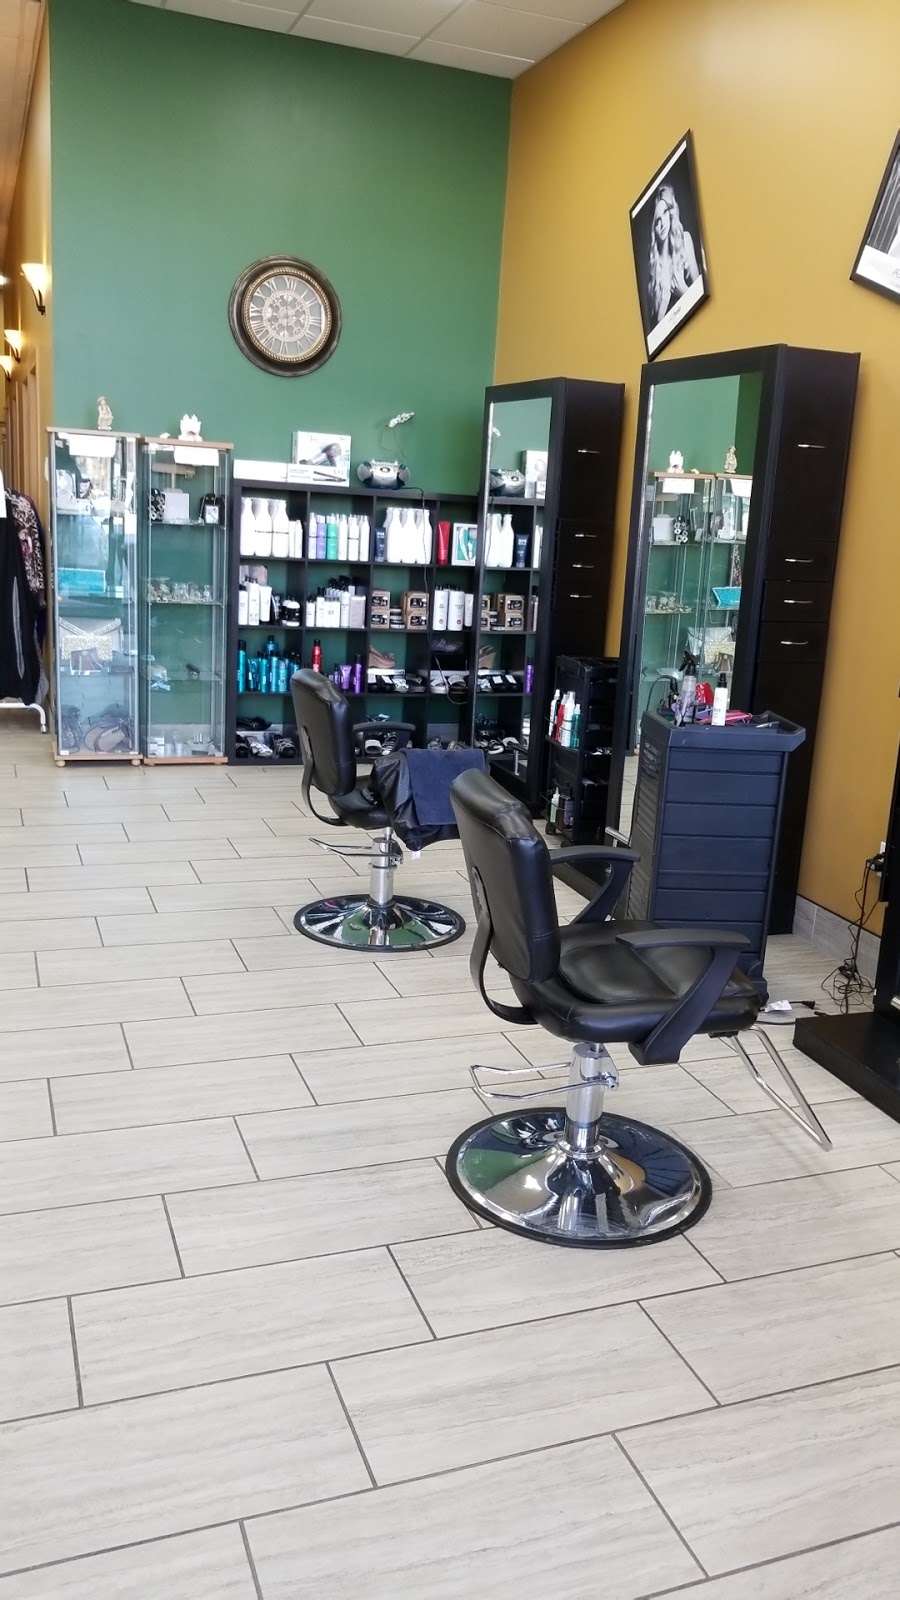 Uni-Cutters Hair Salon Ltd | 6937 Ellerslie Rd SW, Edmonton, AB T6X 1A3, Canada | Phone: (780) 413-9117